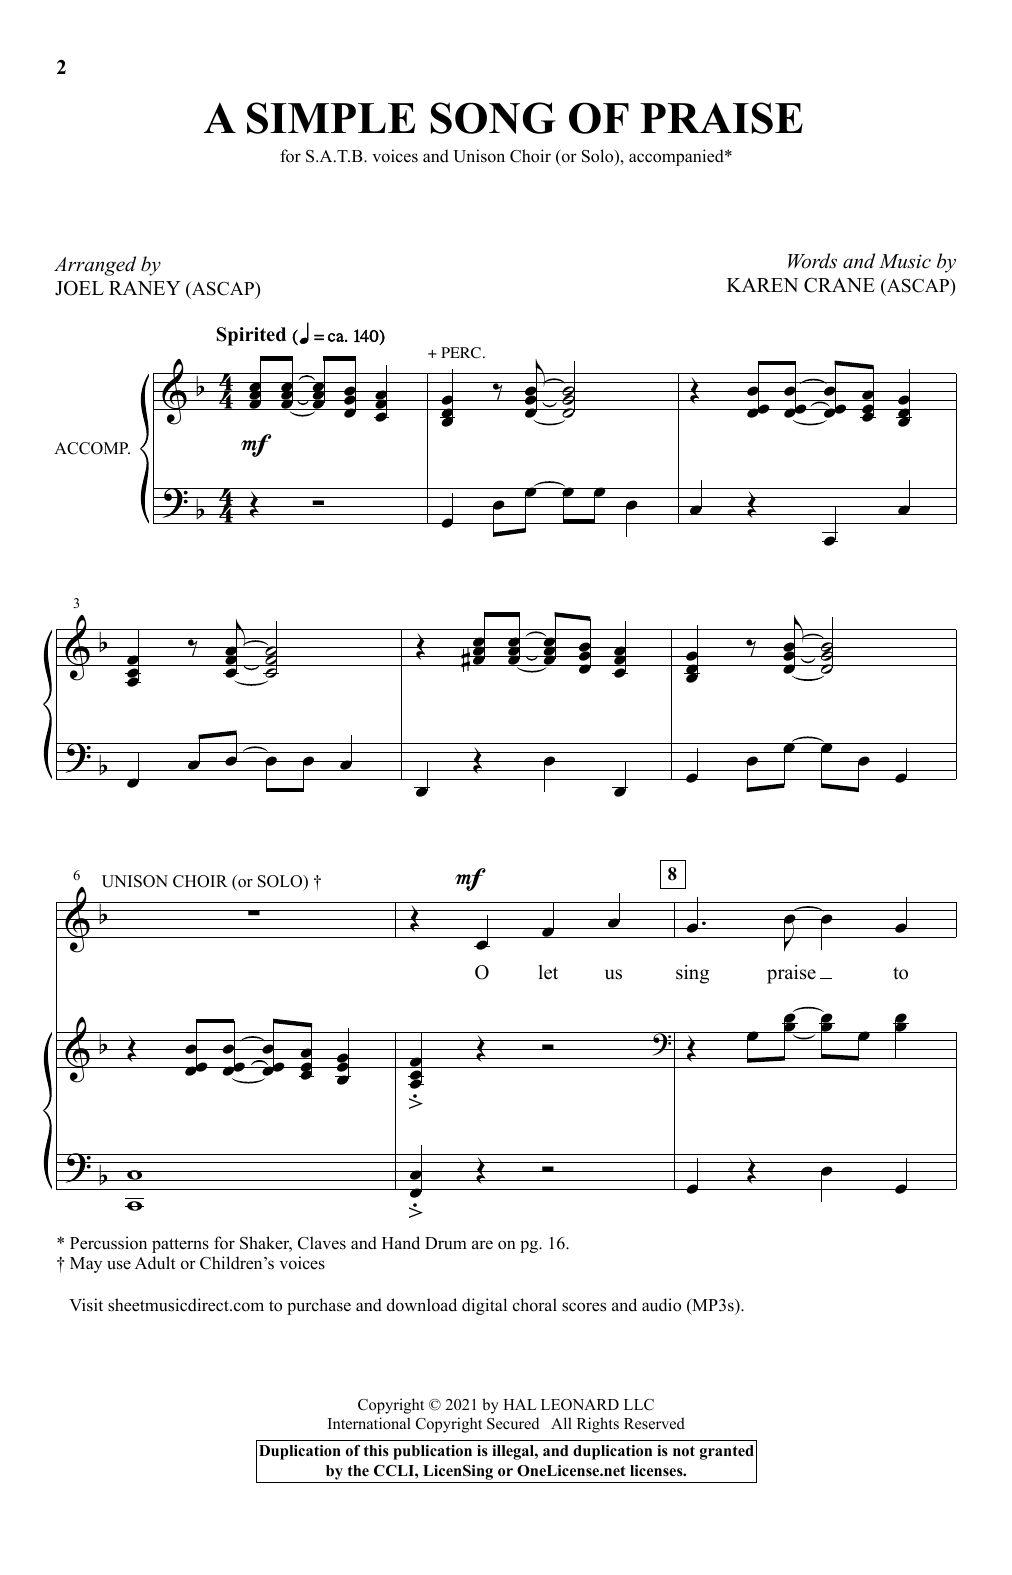 Karen Crane A Simple Song Of Praise (arr. Joel Raney) Sheet Music Notes & Chords for SATB Choir - Download or Print PDF